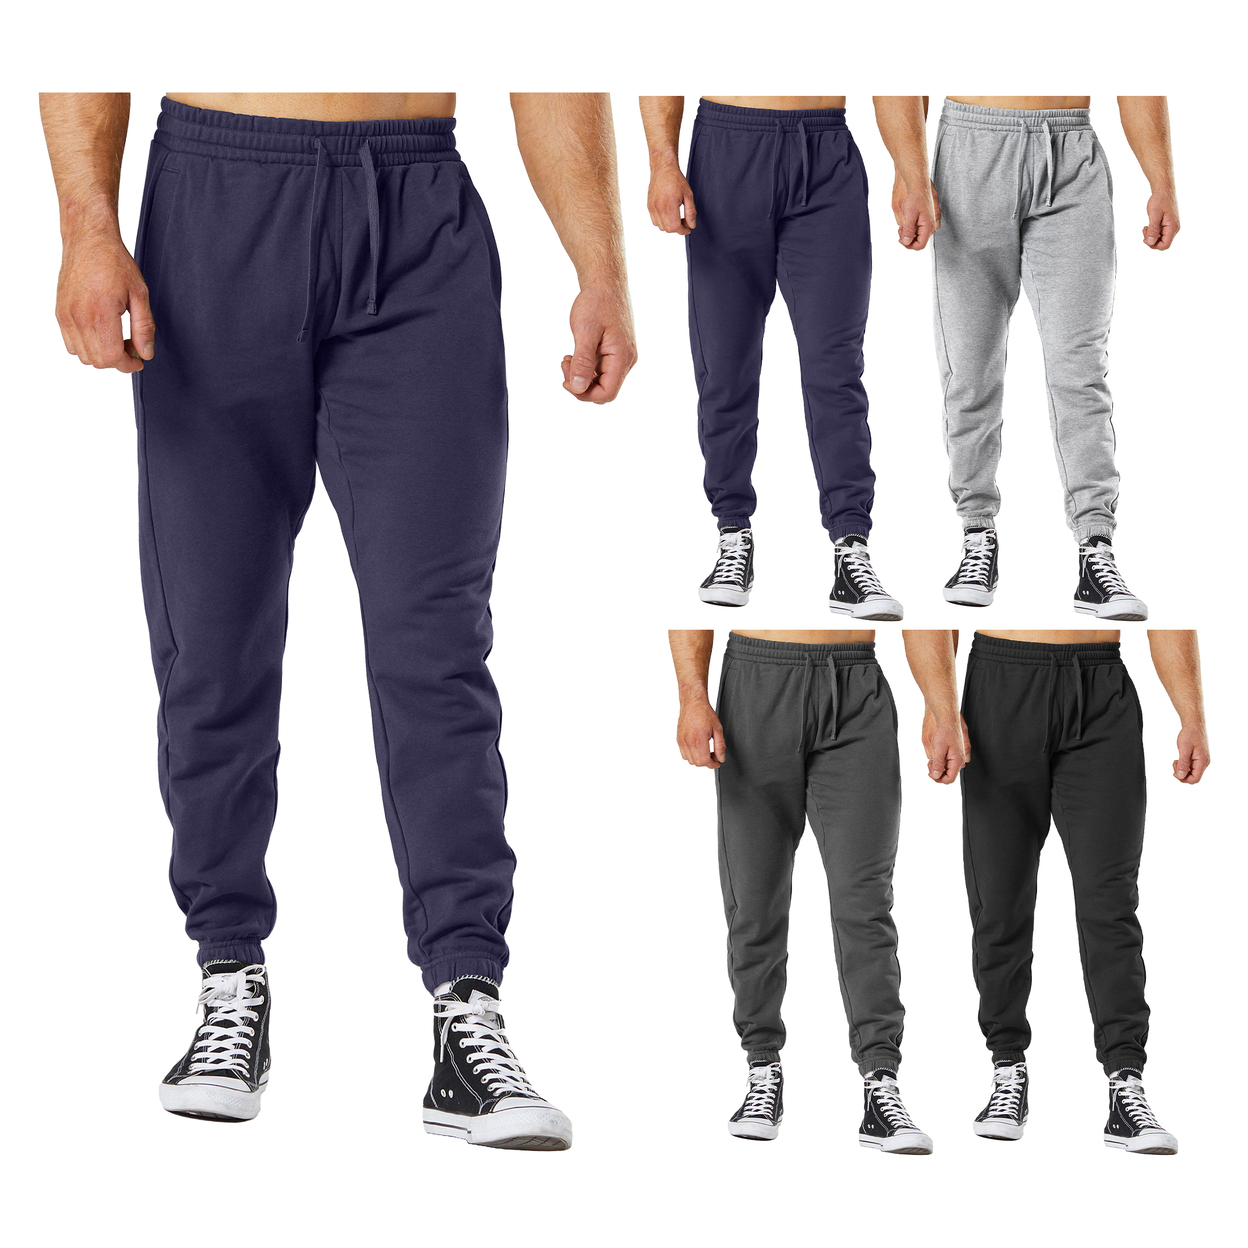 Men's Ultra-Soft Cozy Winter Warm Casual Fleece Lined Sweatpants Jogger - Grey, Medium